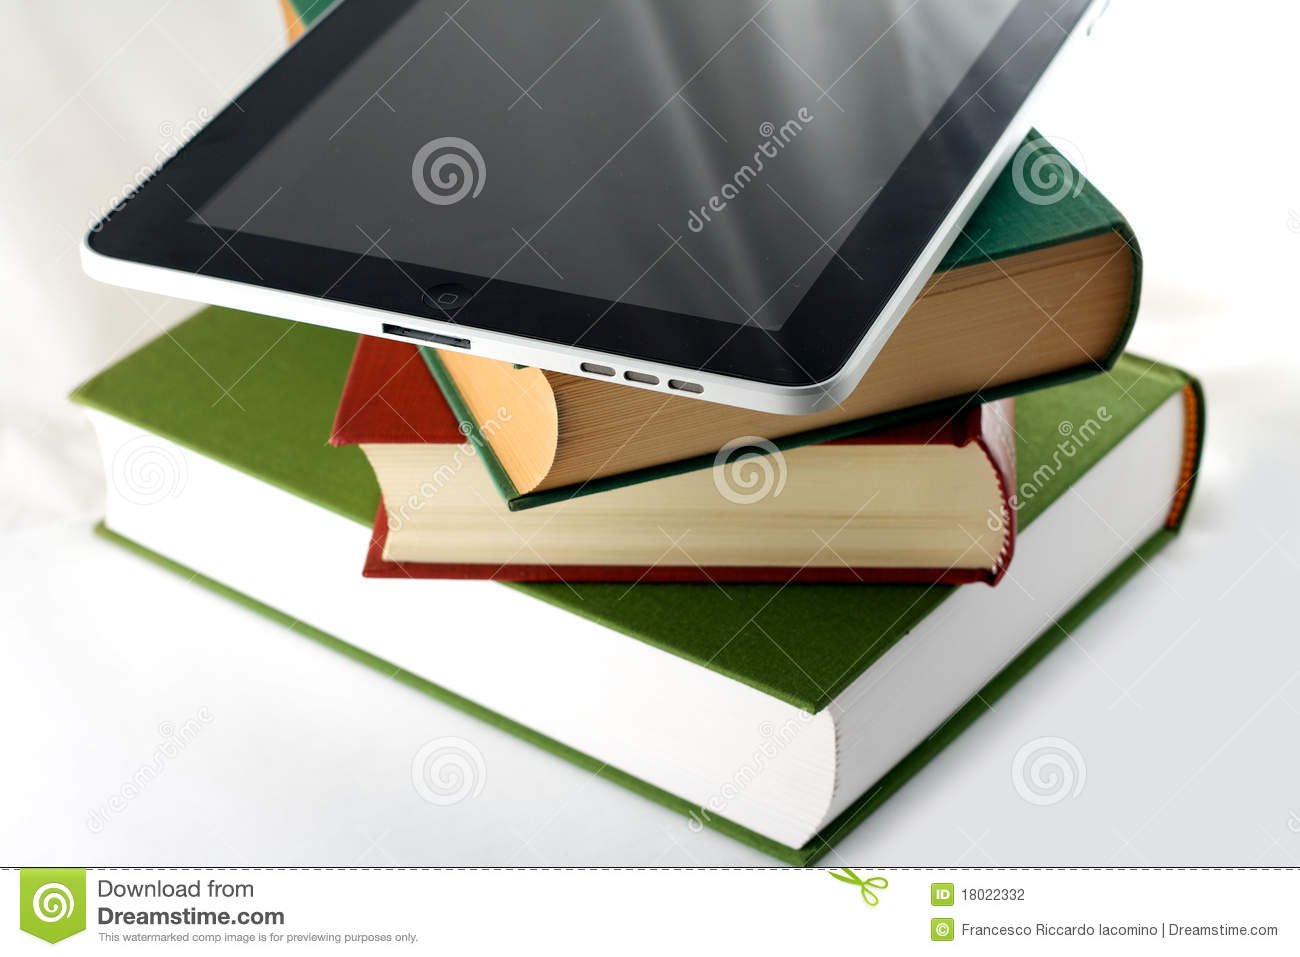 ebook reader for pc,mac,ipad